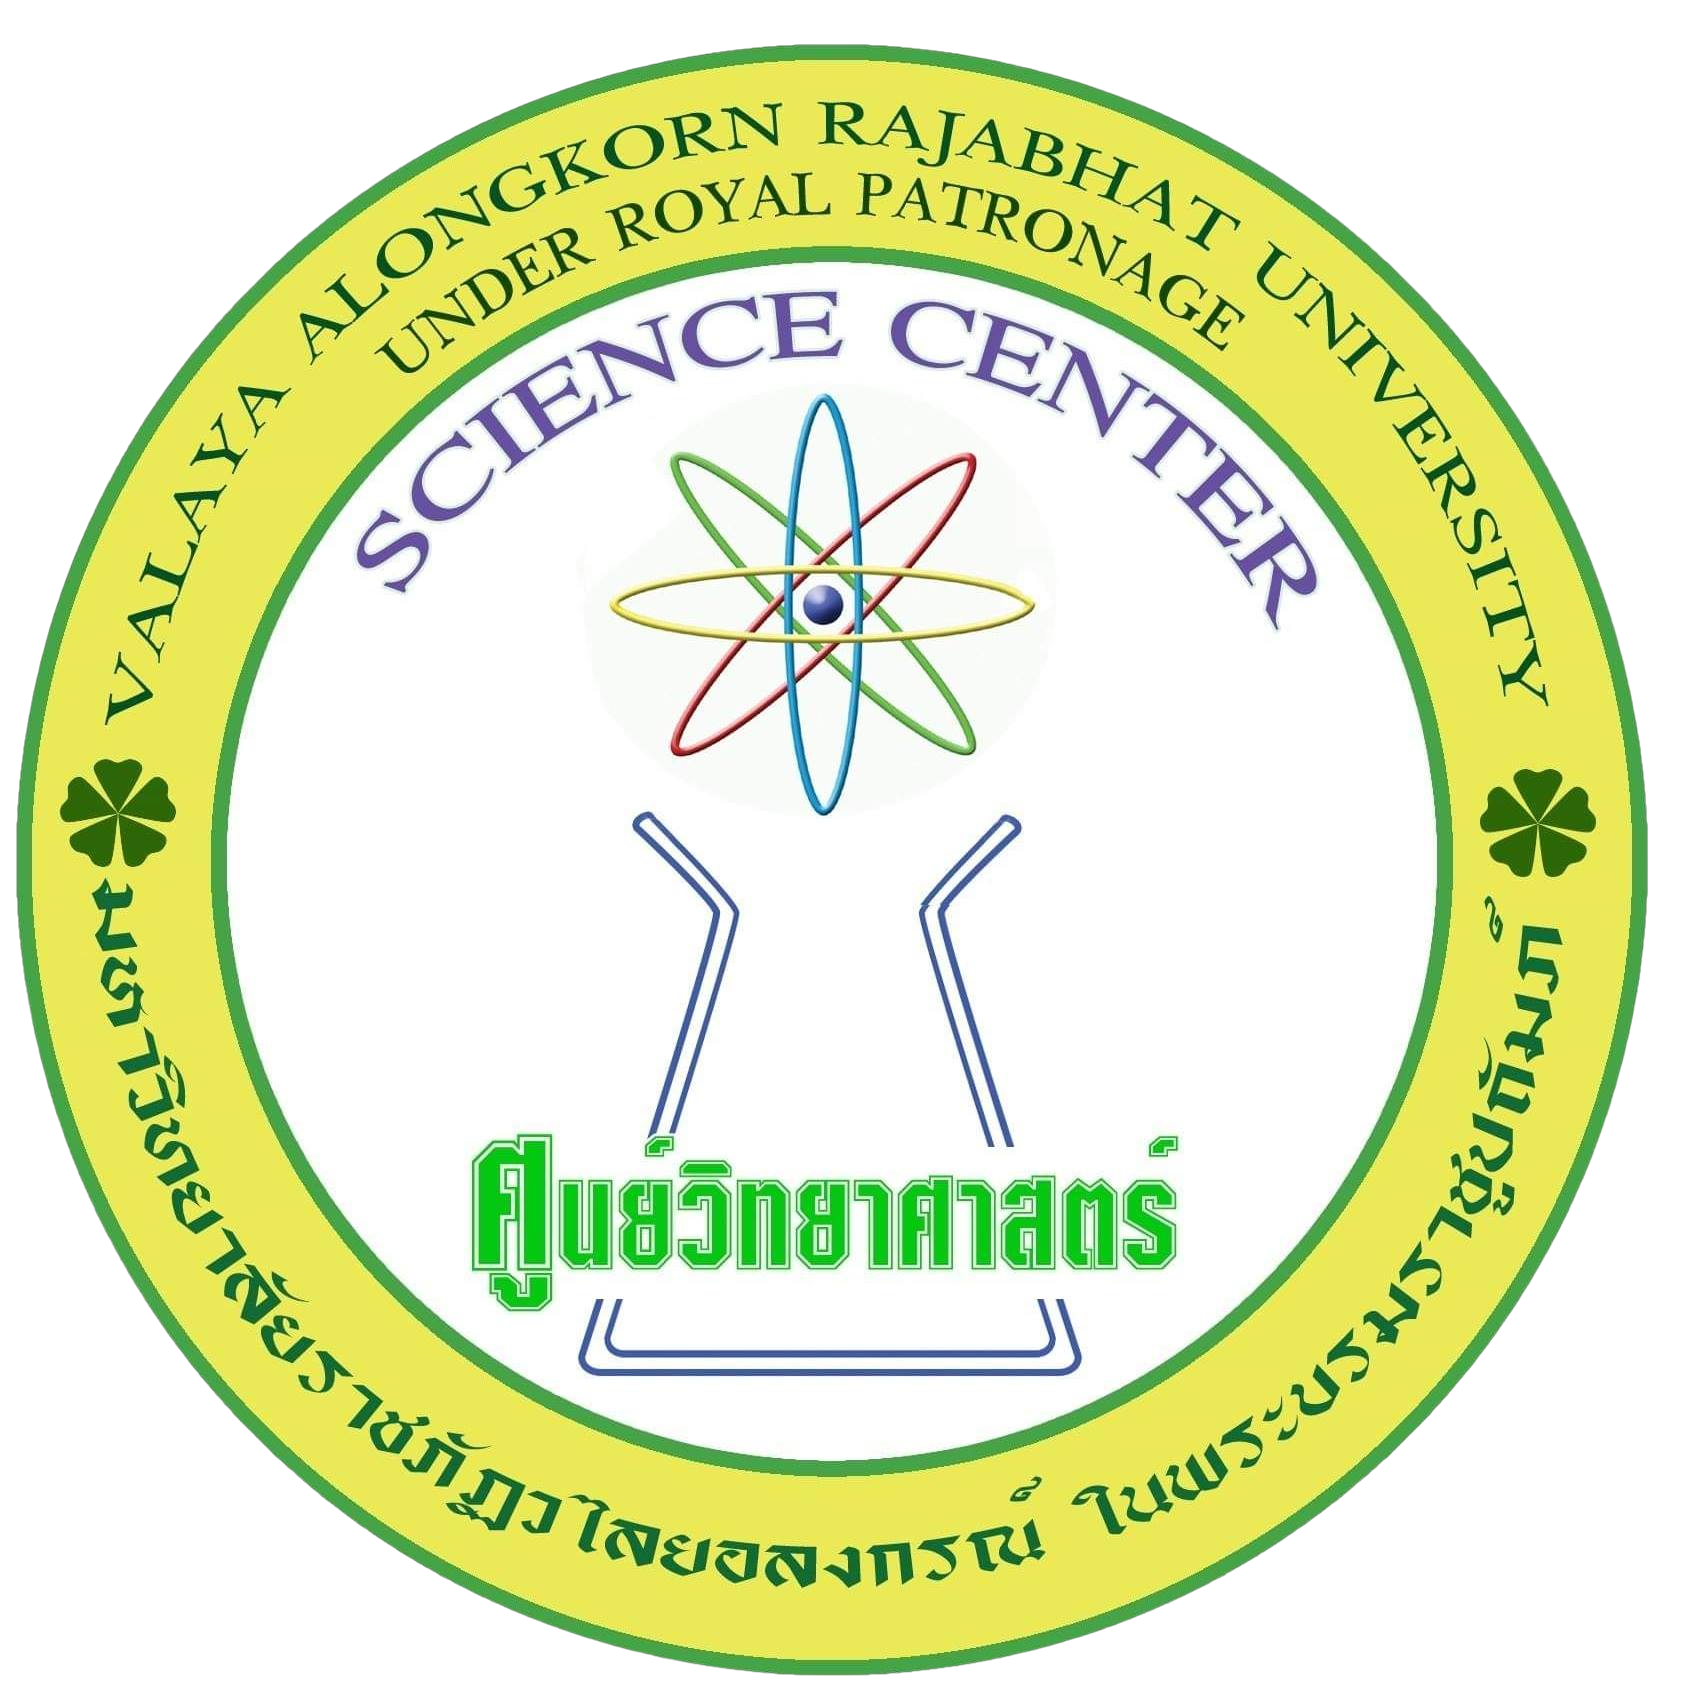 Science Center VRU